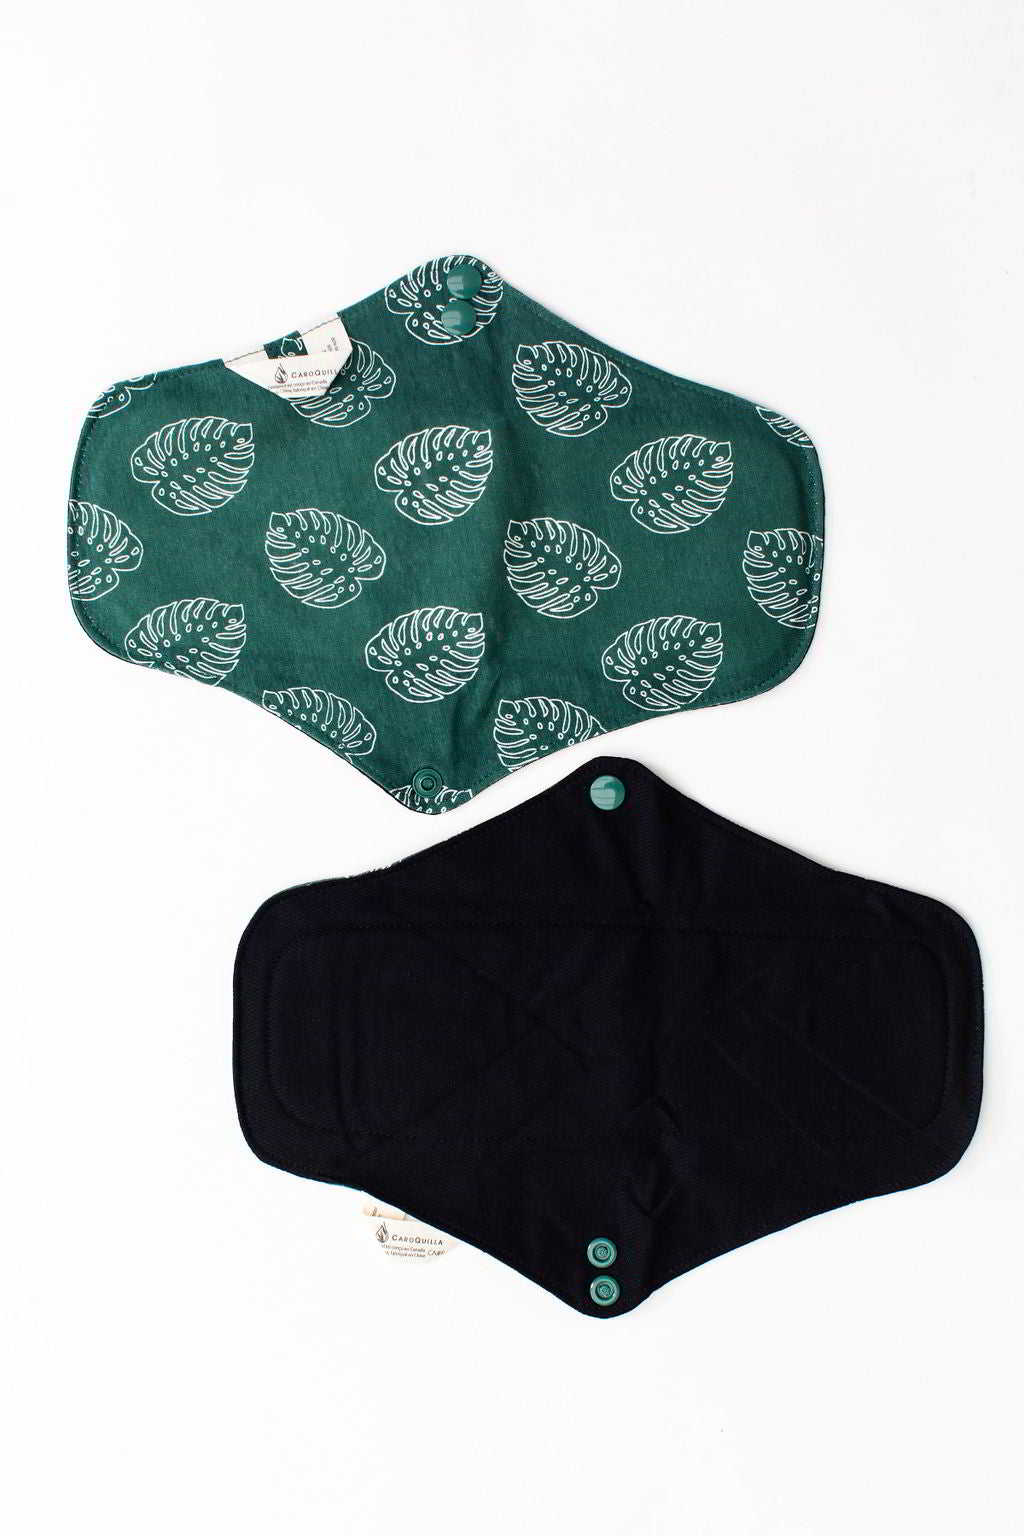 CaroQuilla's Bamboo Underwear by Maria Valencia » FAQ — Kickstarter